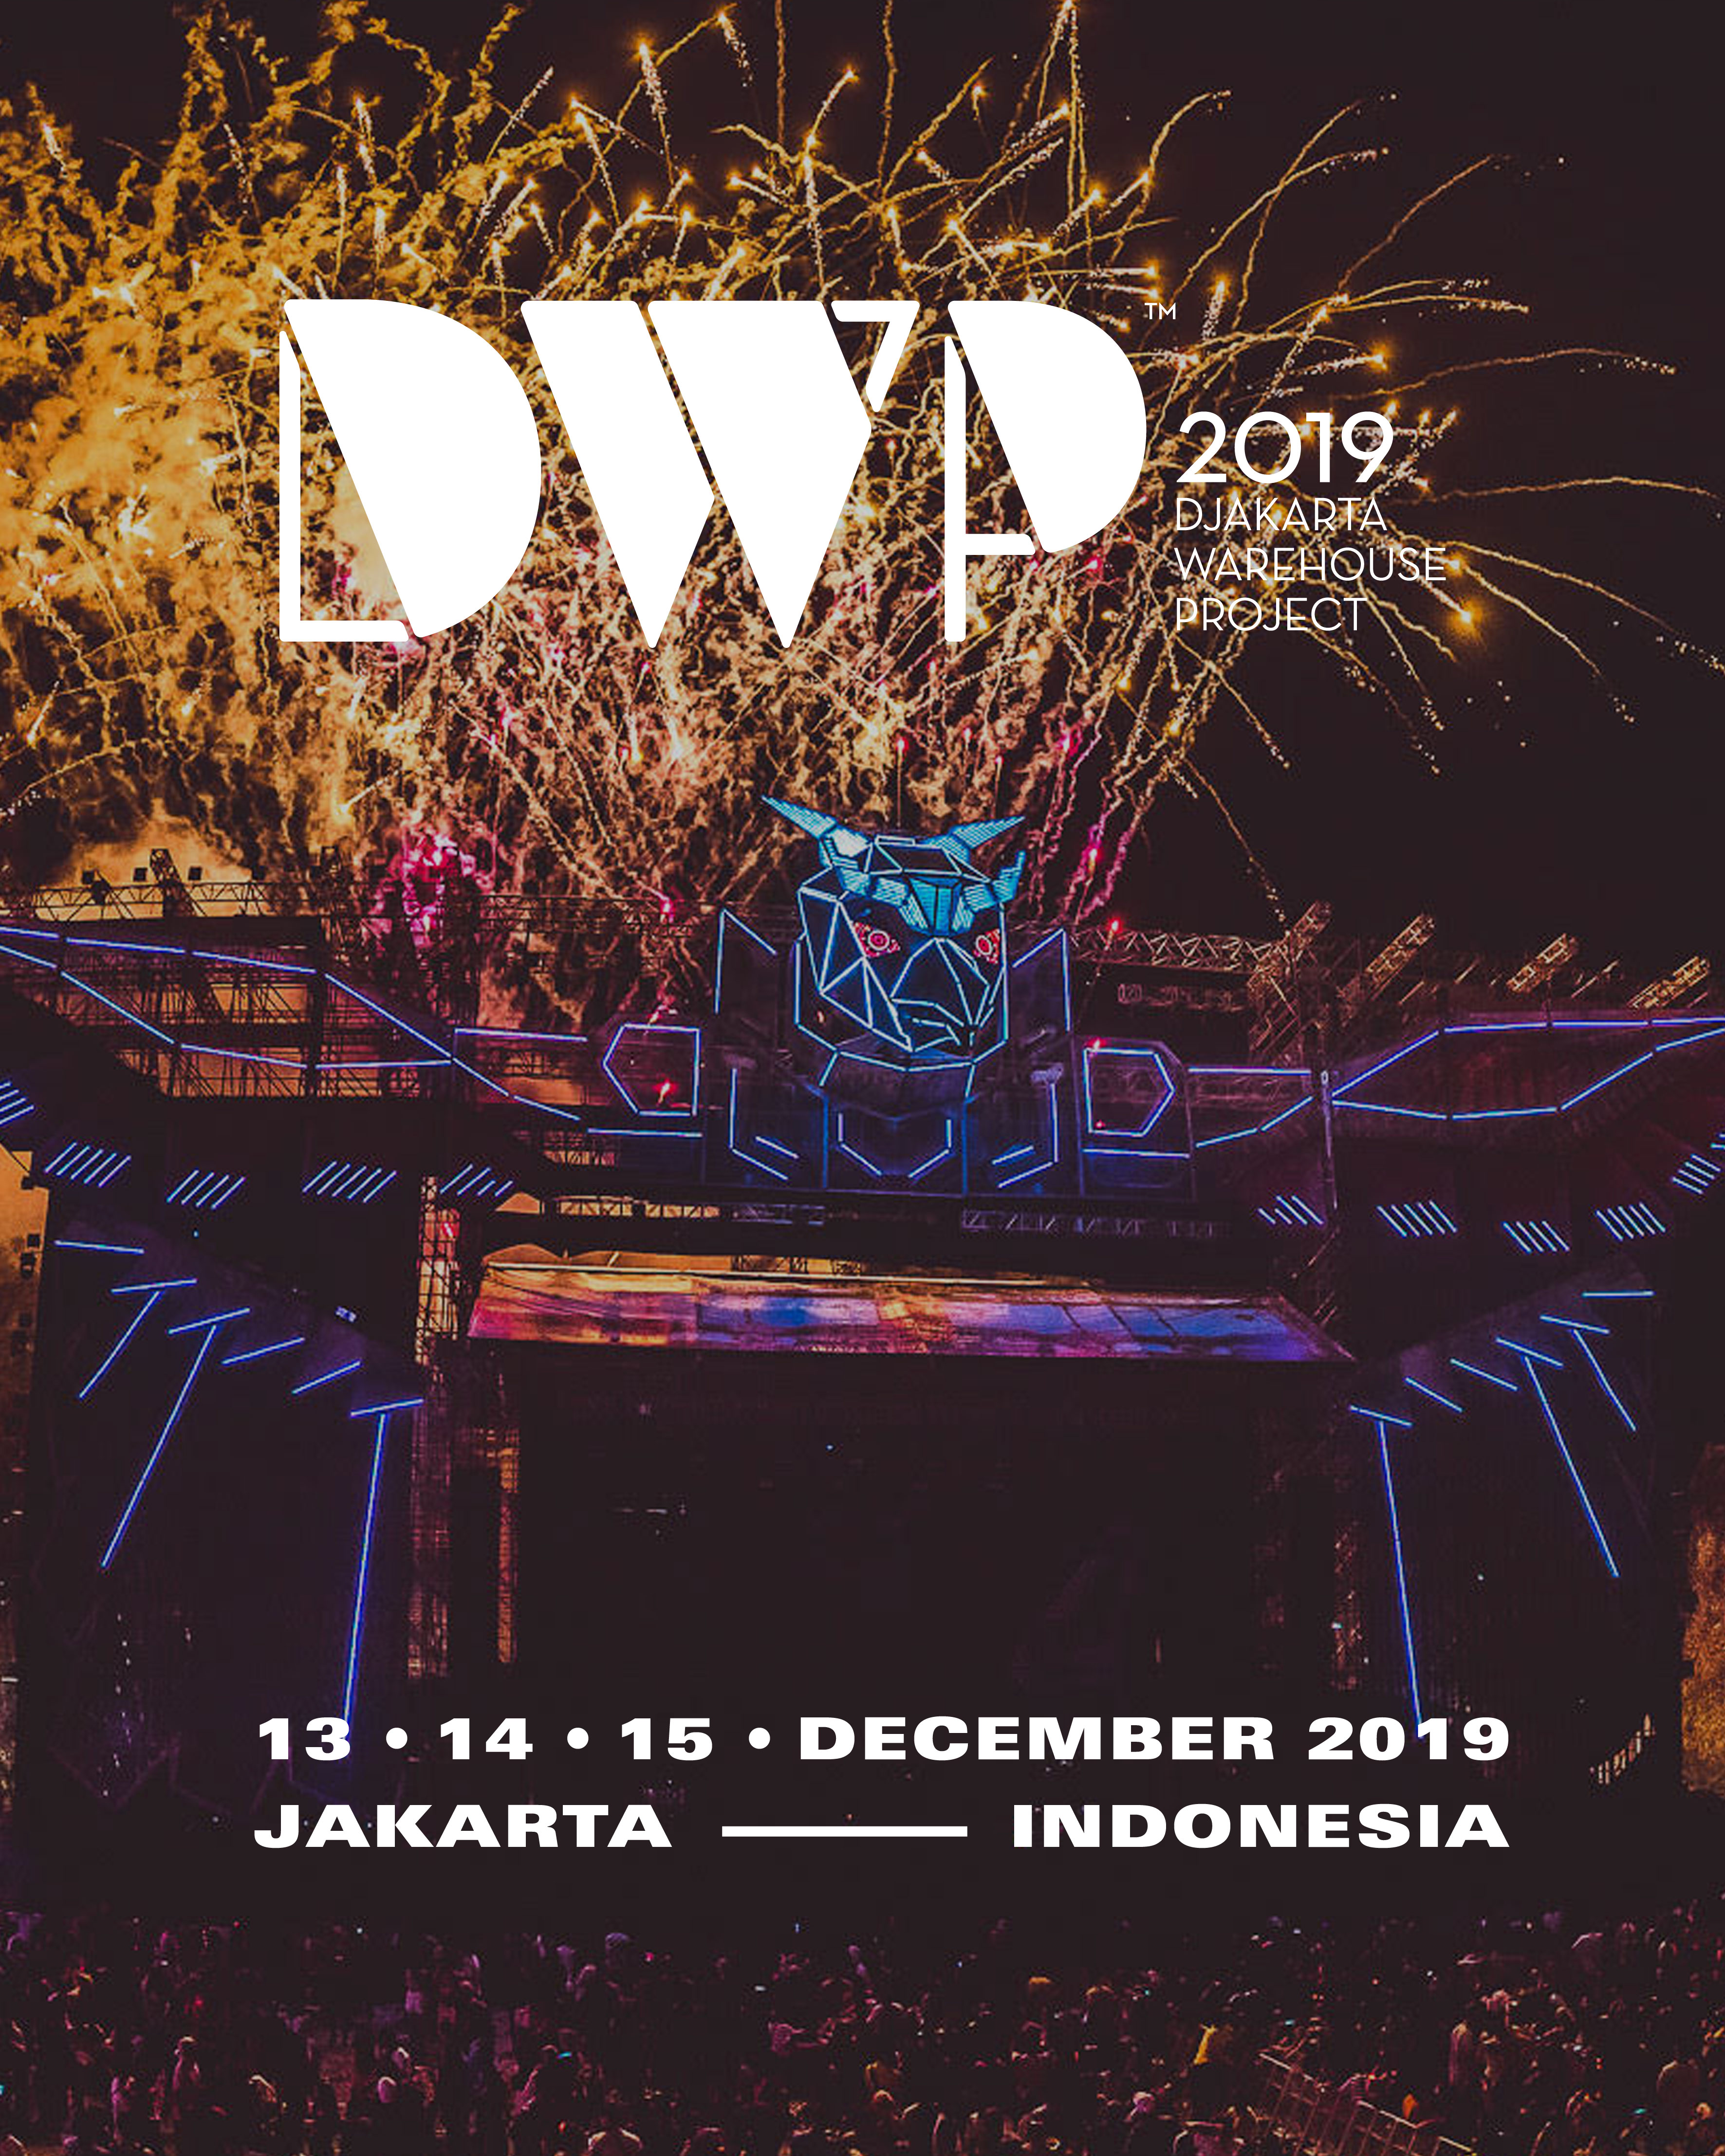 Tiket Djakarta Warehouse Project 2019 | DEATHROCKSTAR